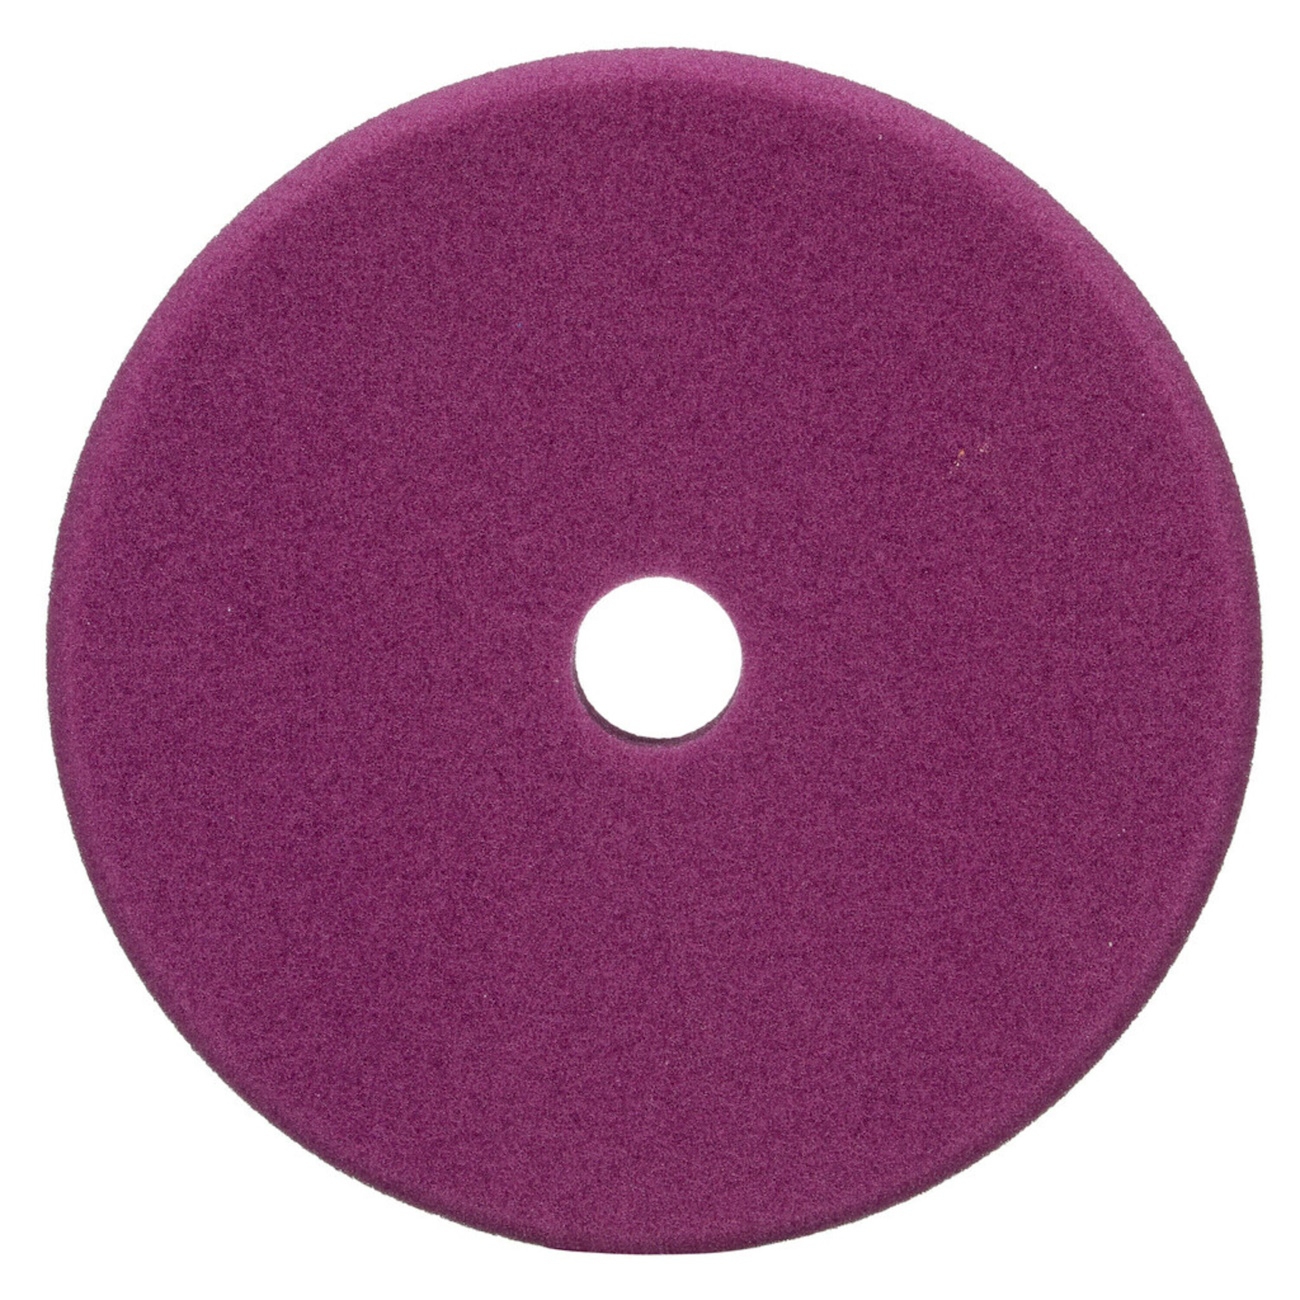 3M Perfect-it fine foam polishing pad for eccentric polishing machine, violet, 130 mm, 34123 (pack = 2 pieces)